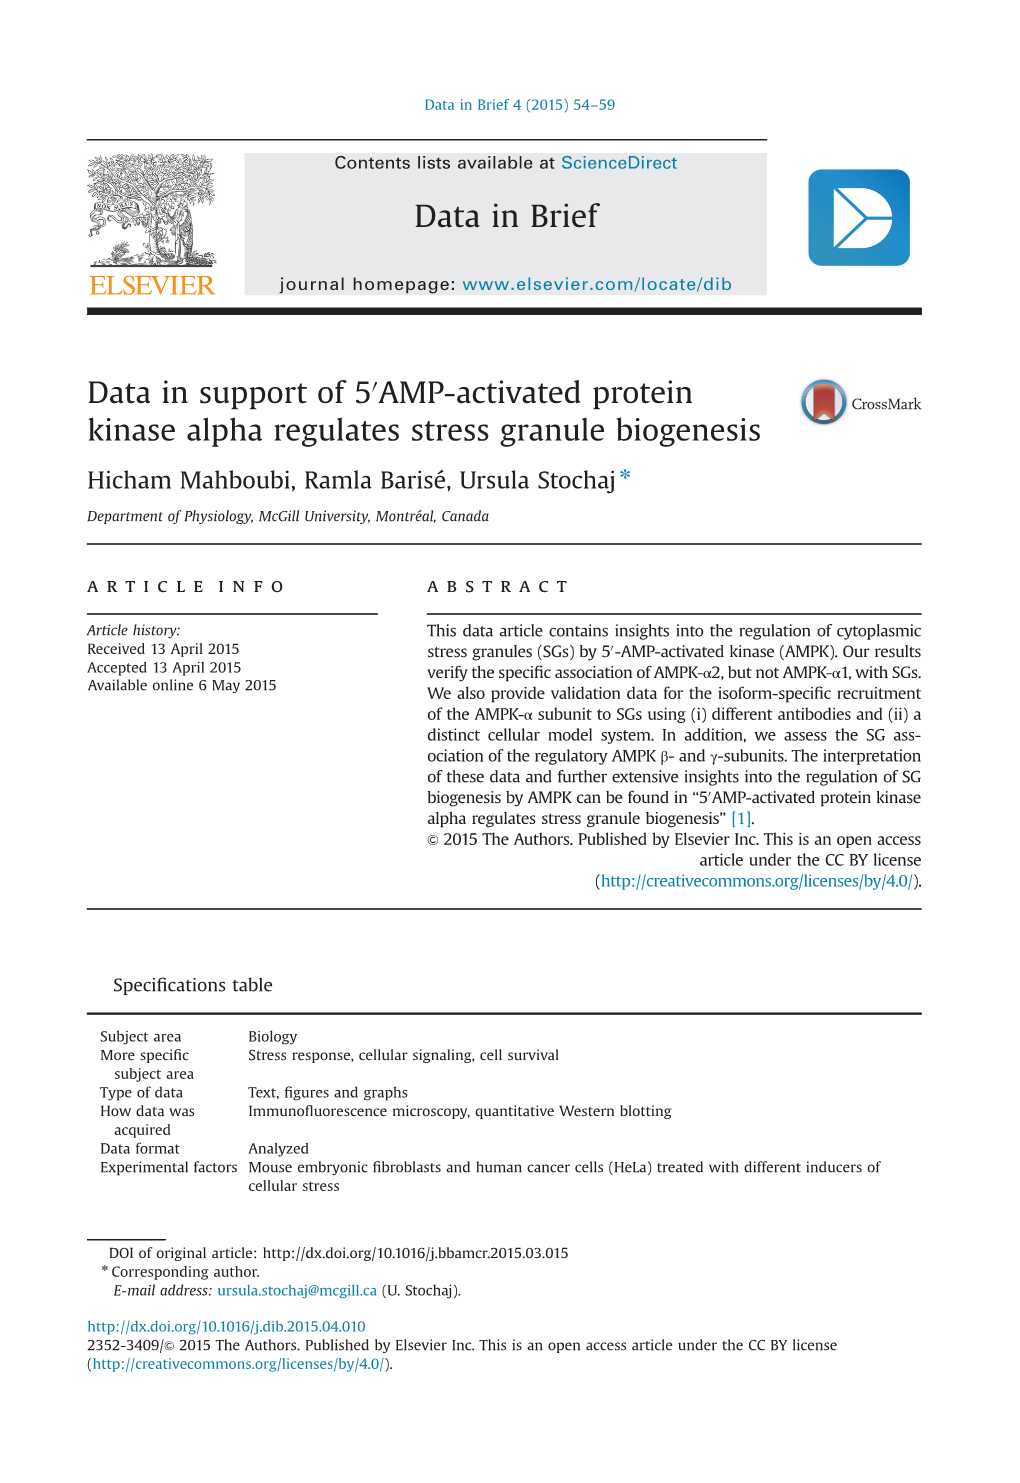 AMP-Activated Protein Kinase Alpha Regulates Stress Granule Biogenesis